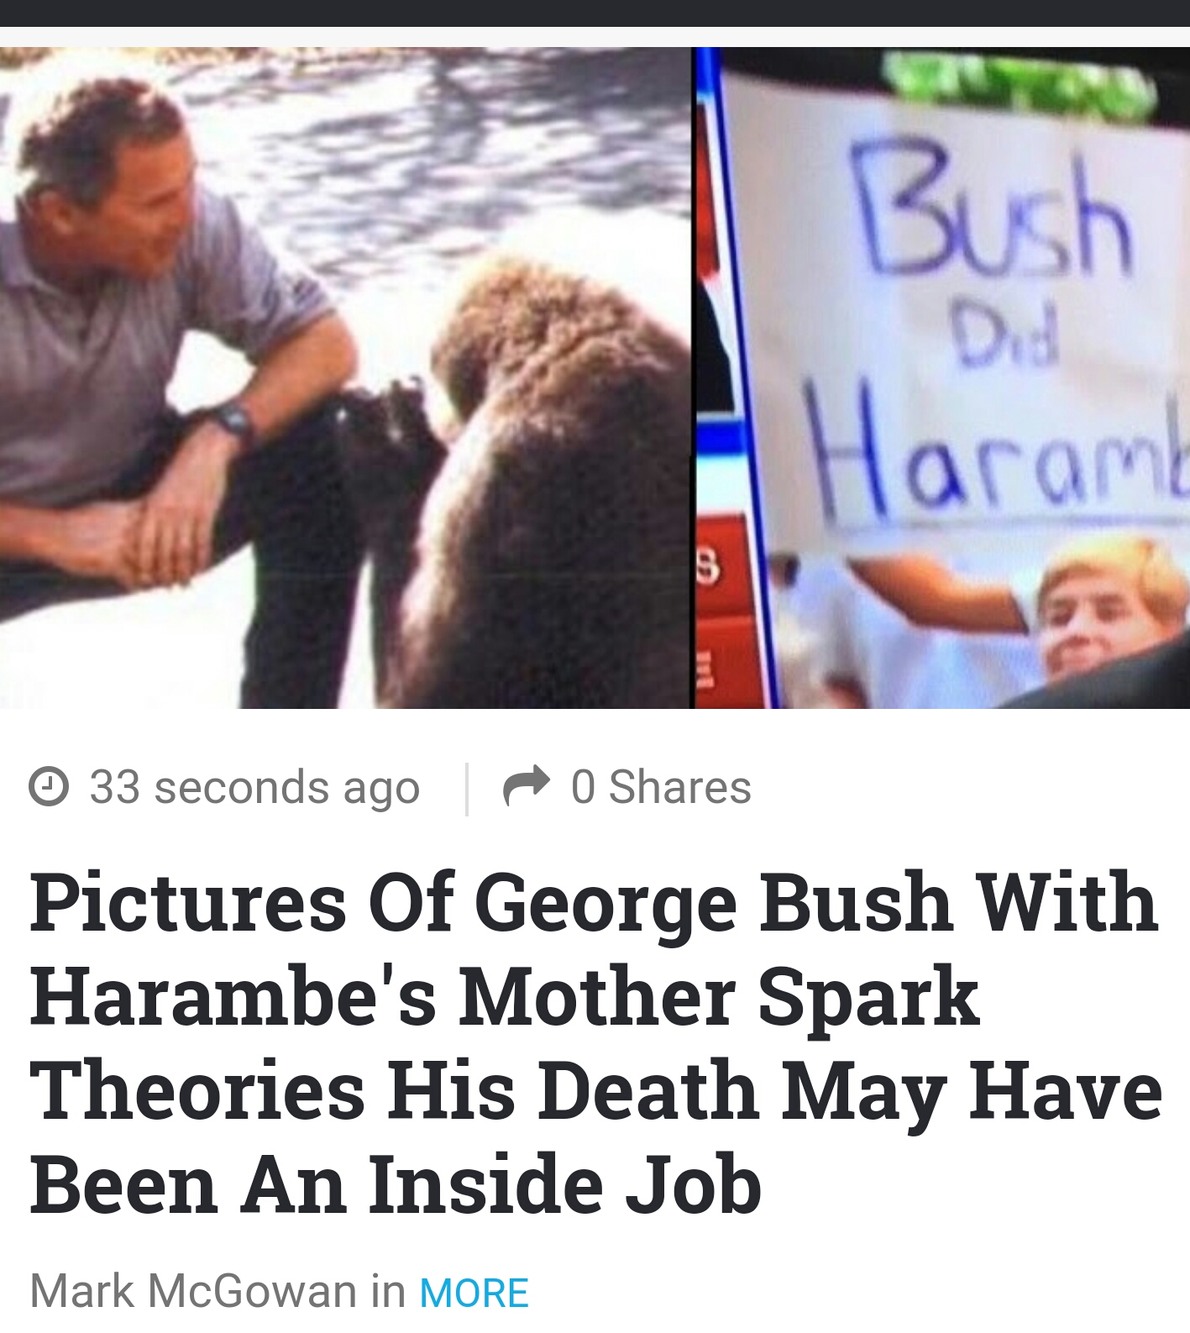 Bush did harambe - meme